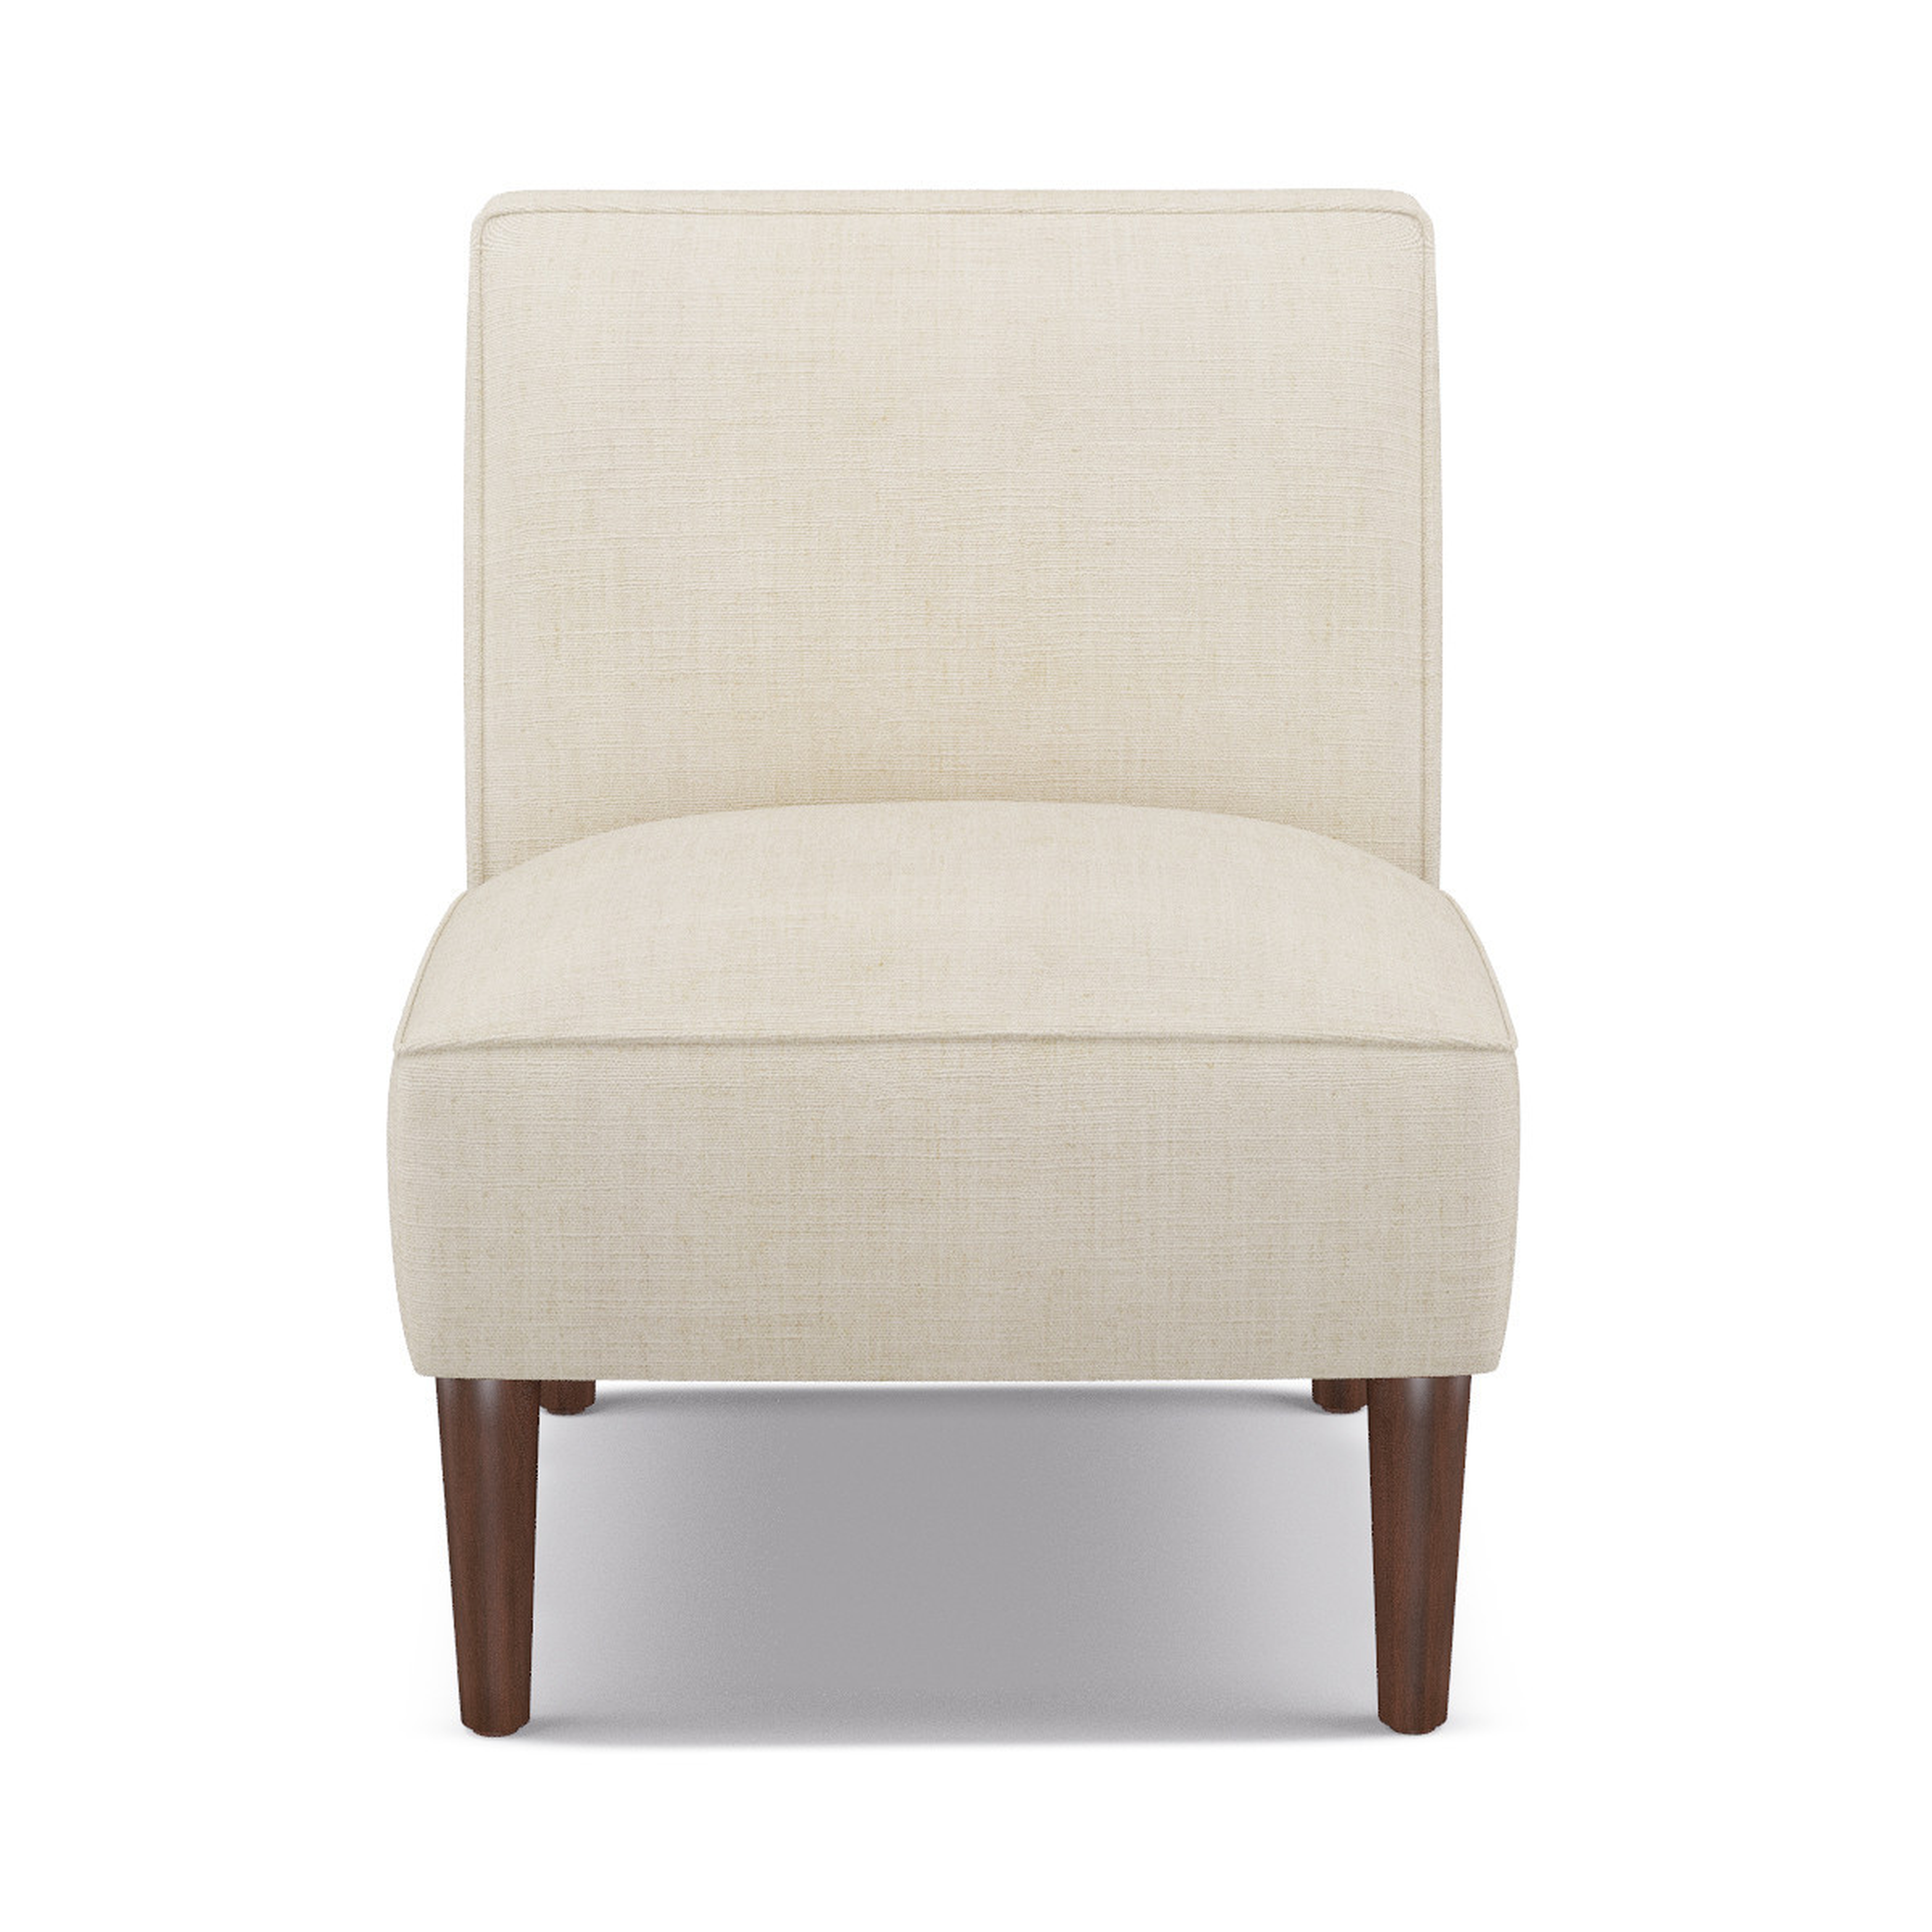 Slipper Chair | Talc Linen - The Inside